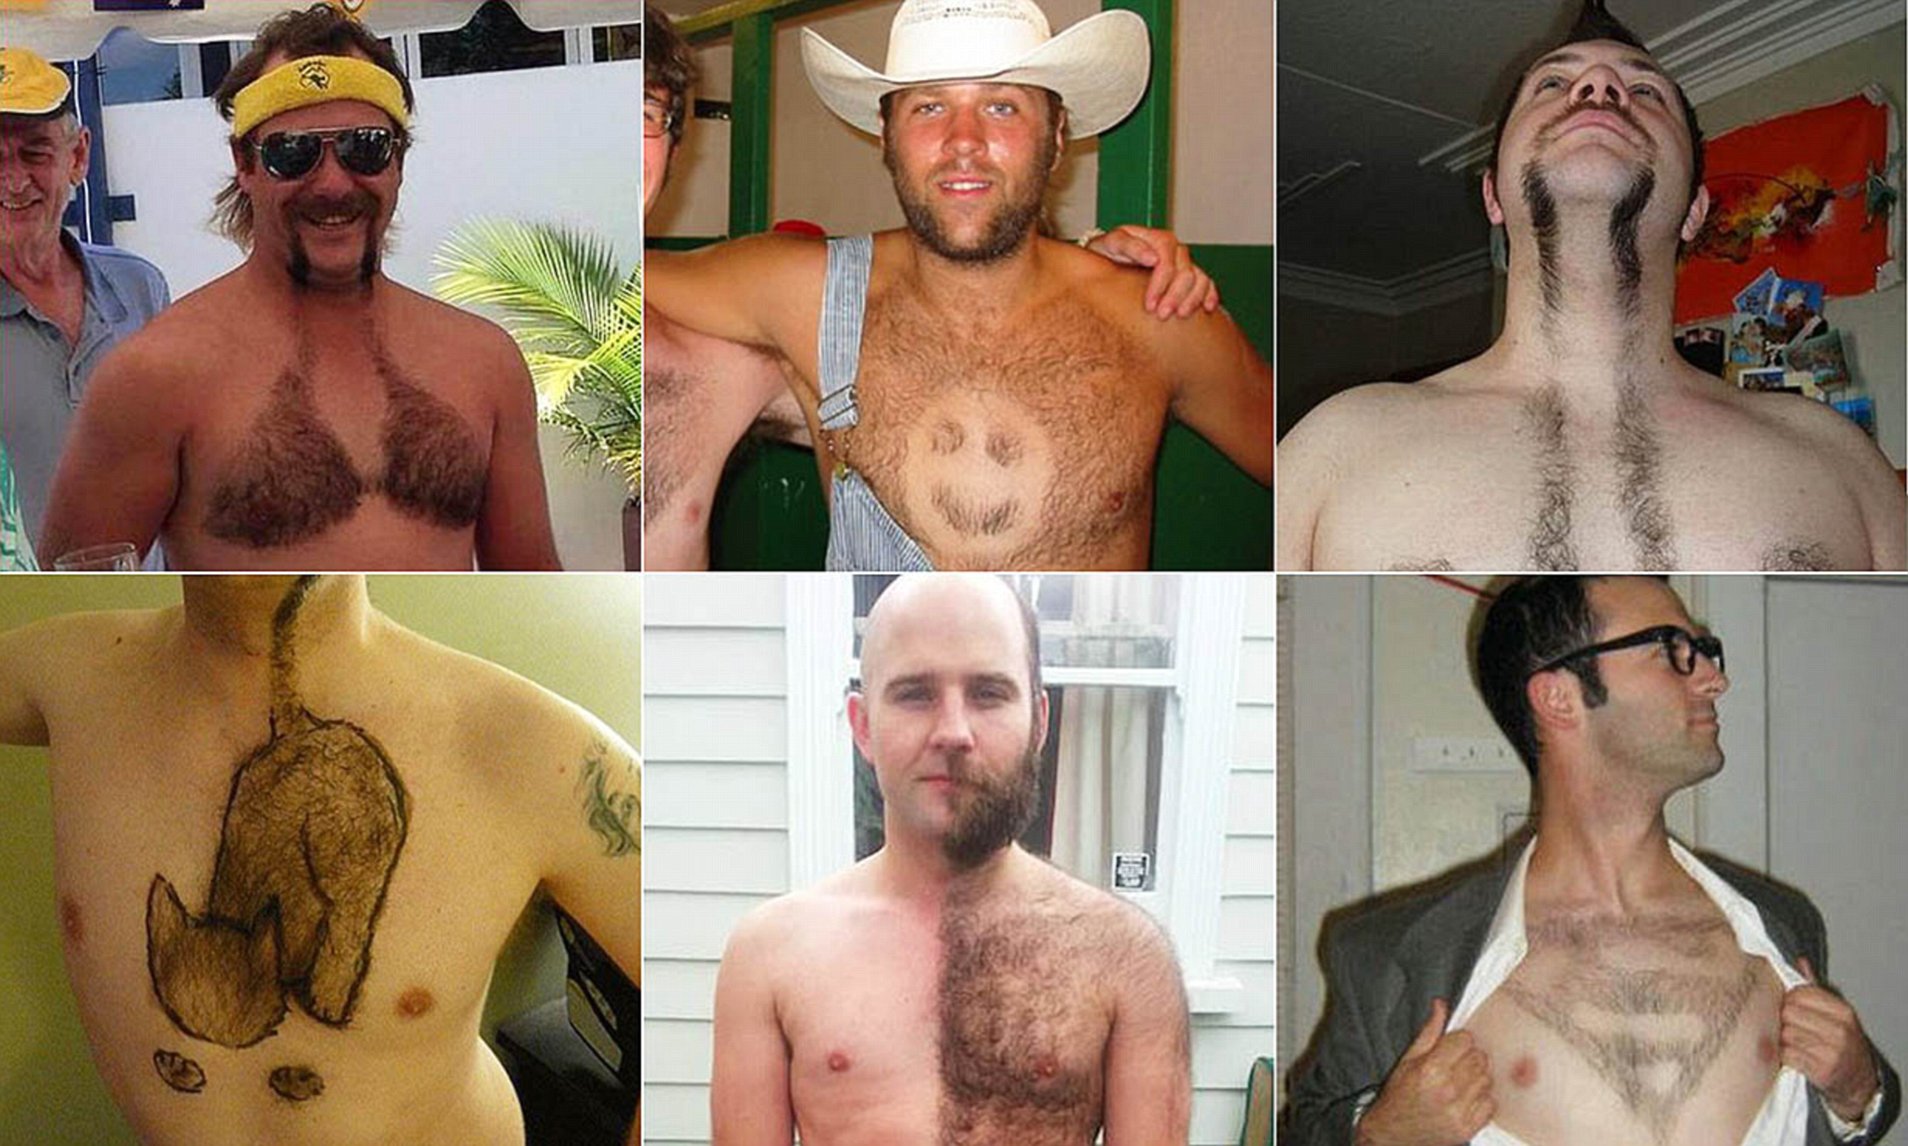 удаления волос на груди у мужчин навсегда фото 116